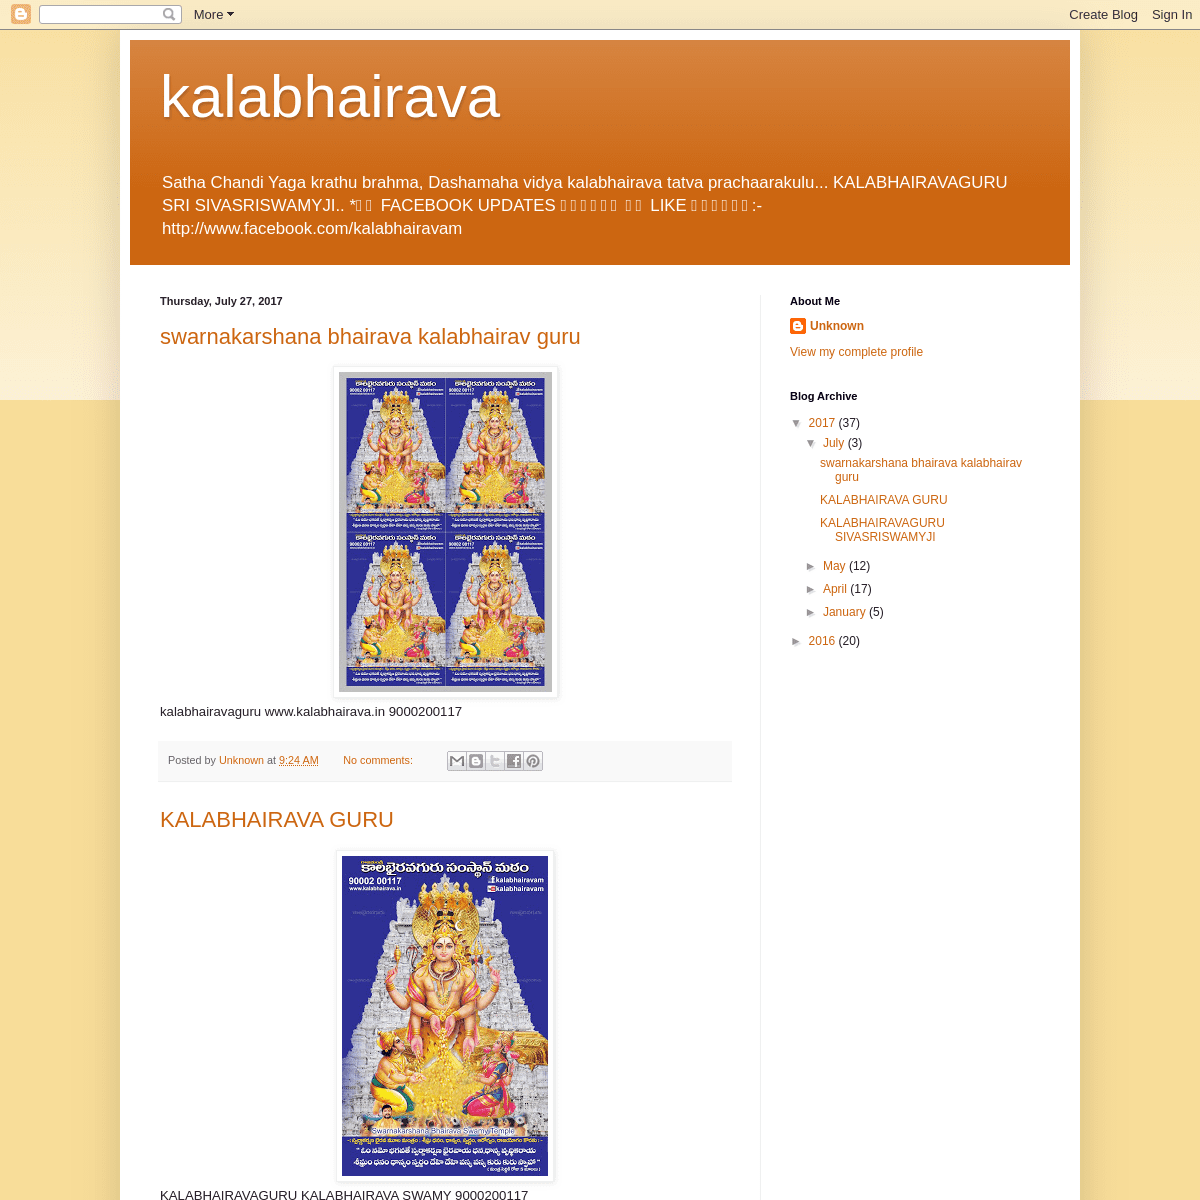 A complete backup of kalabhairavaguruji.blogspot.com